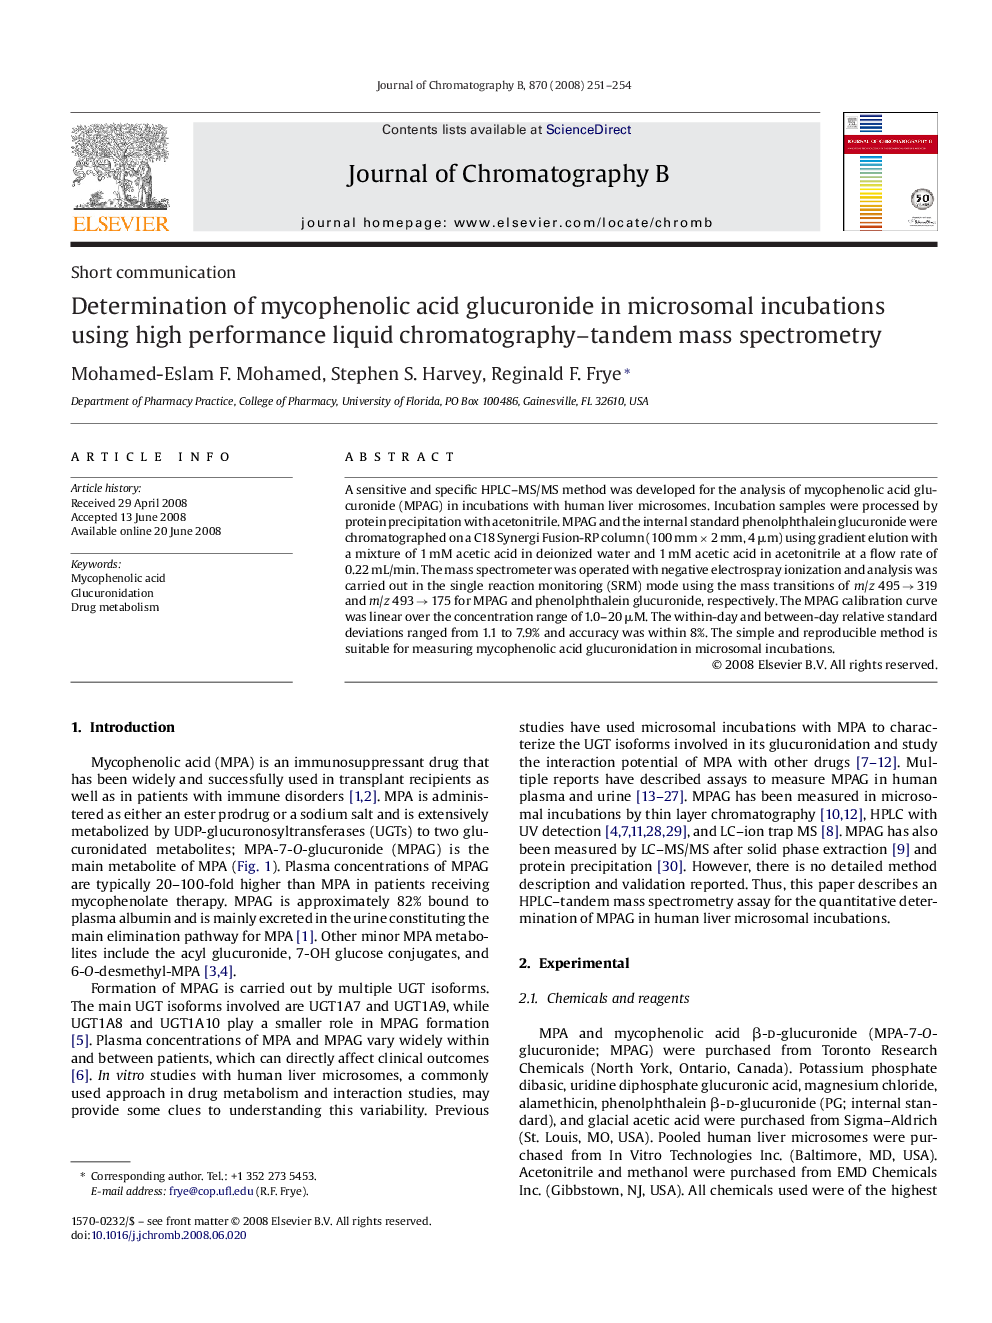 Determination of mycophenolic acid glucuronide in microsomal incubations using high performance liquid chromatography–tandem mass spectrometry